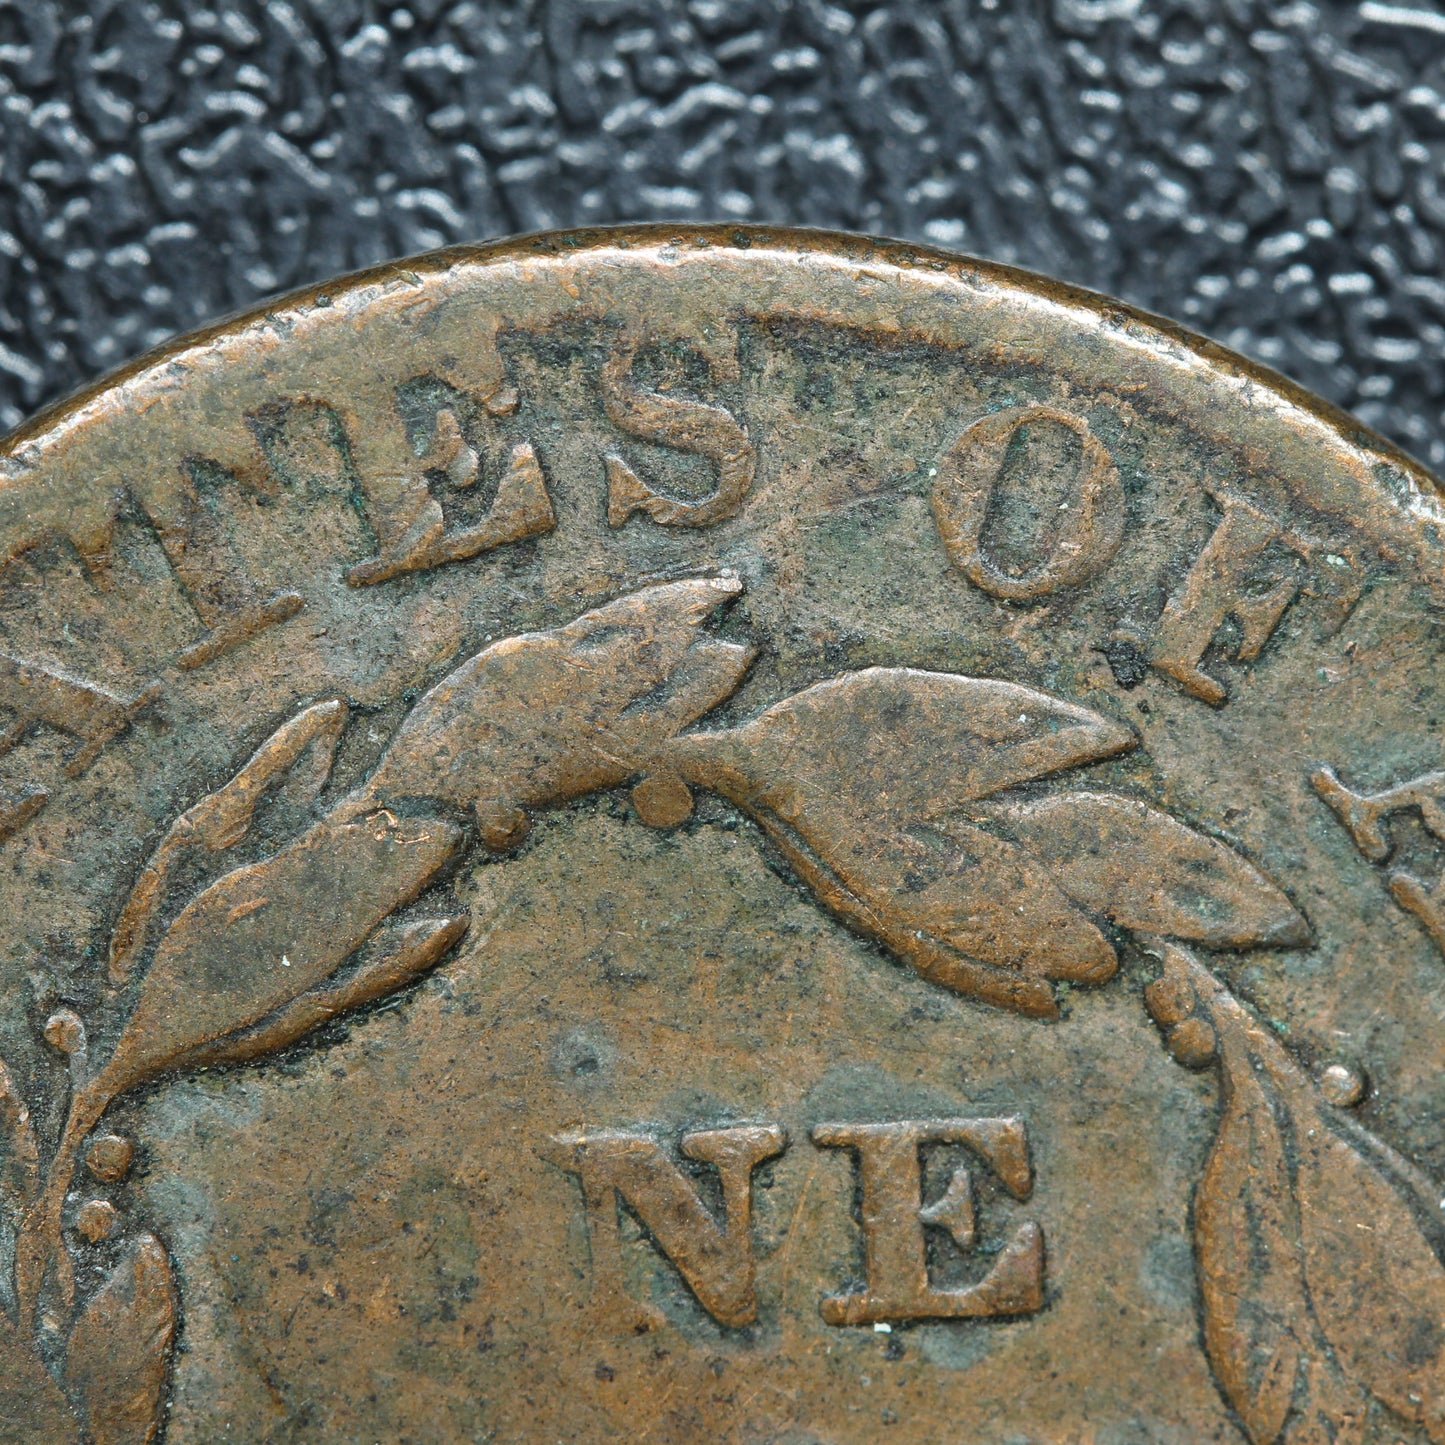 1831 Matron Head Medium Letters Large Cent 1C Penny